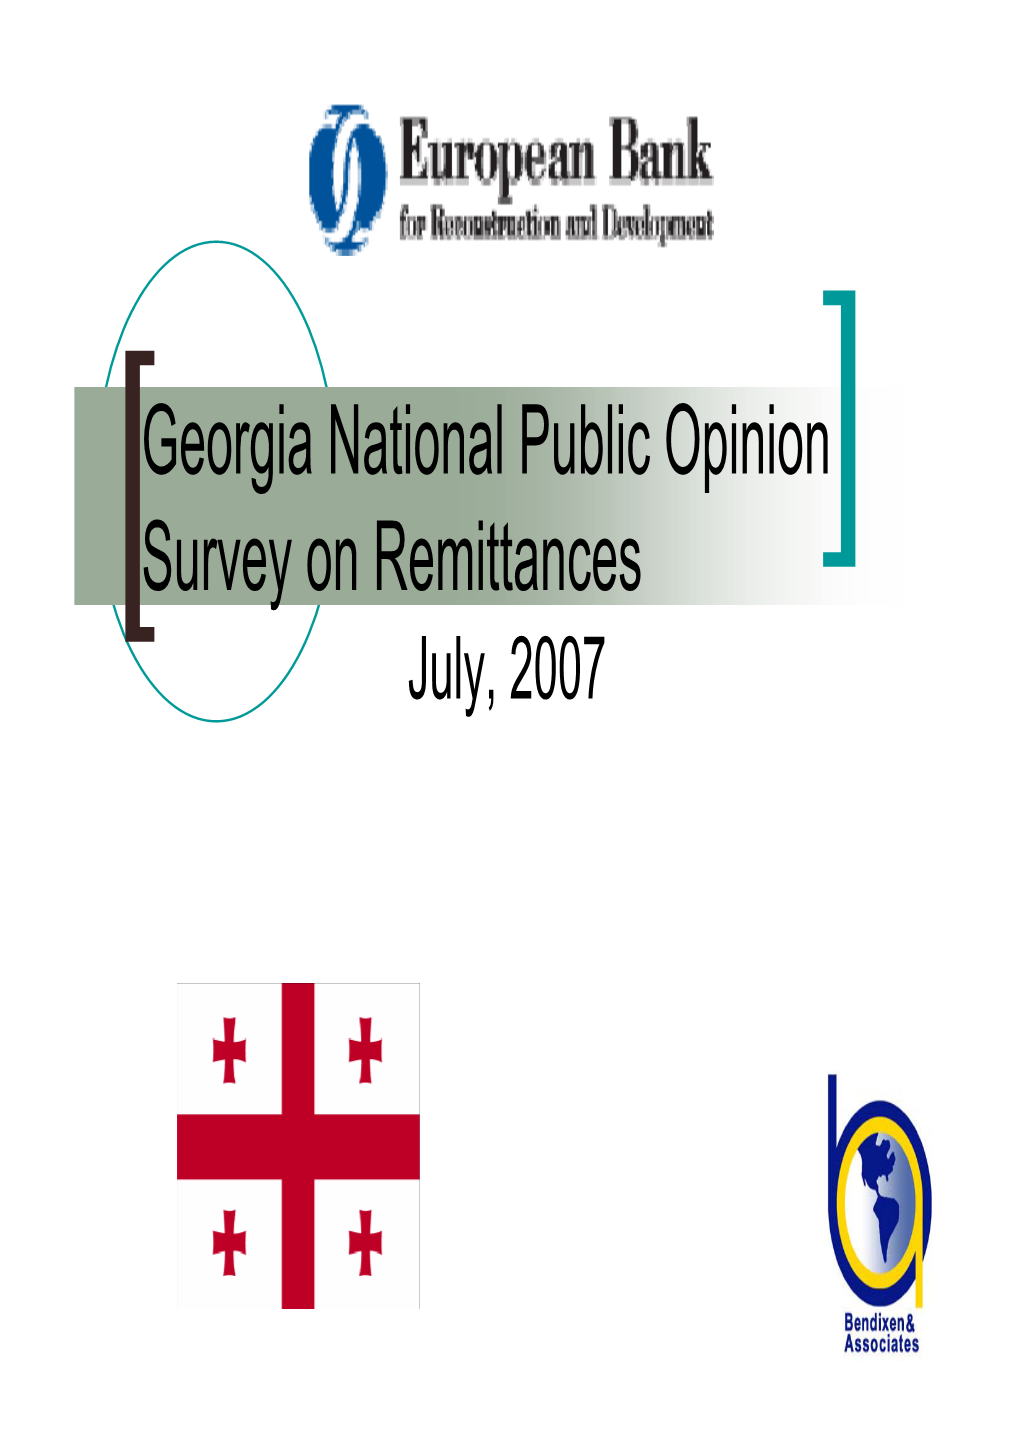 Georgia National Survey on Remittances [EBRD